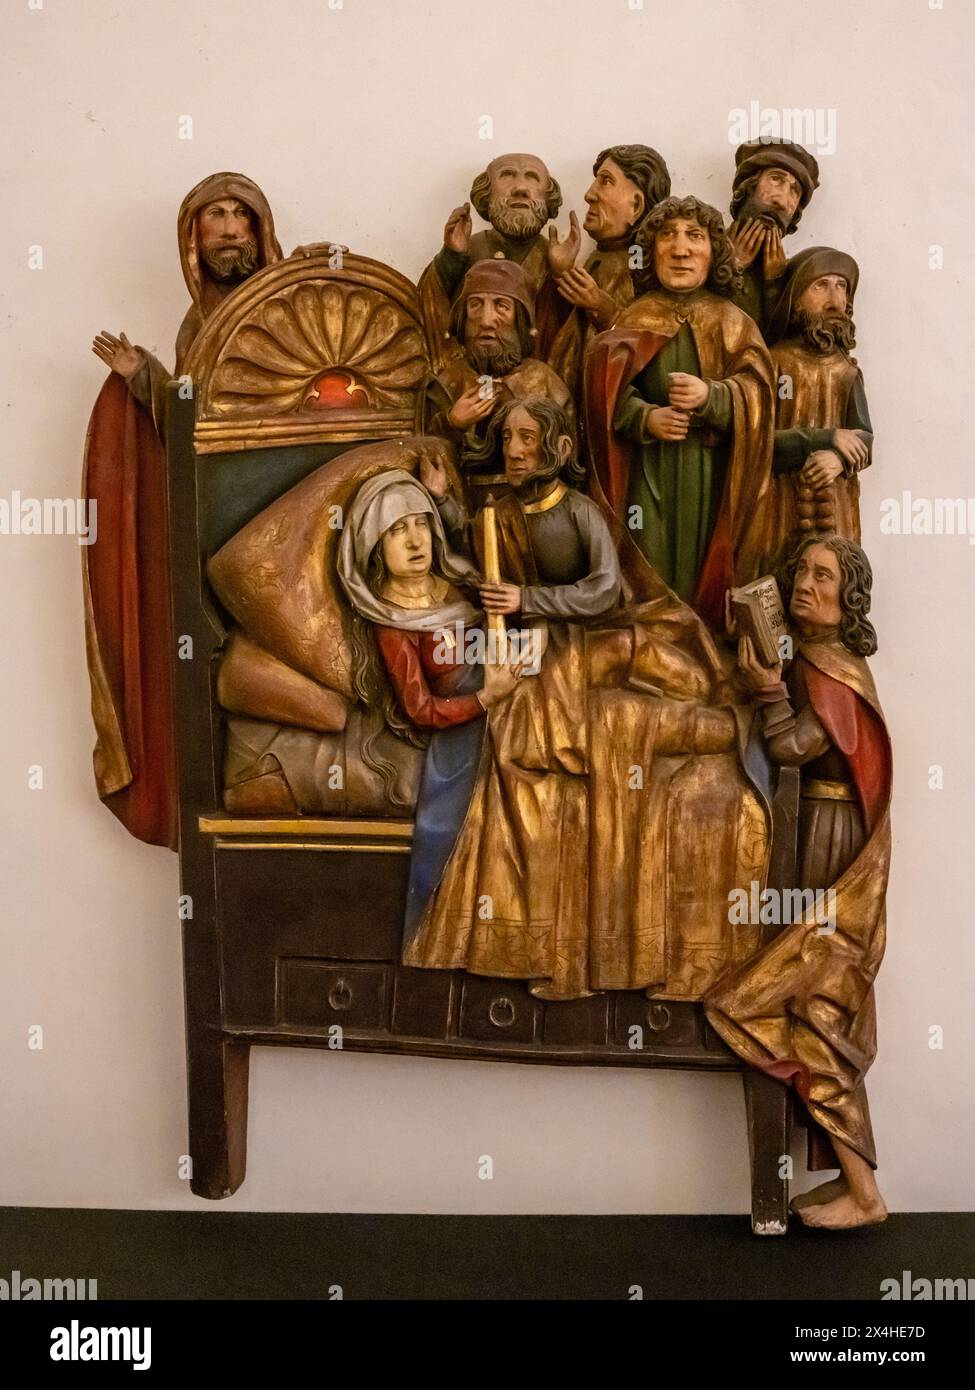 Religious Wooden sculpture, Burg Meersburg, Old Casltle Germany Stock Photo